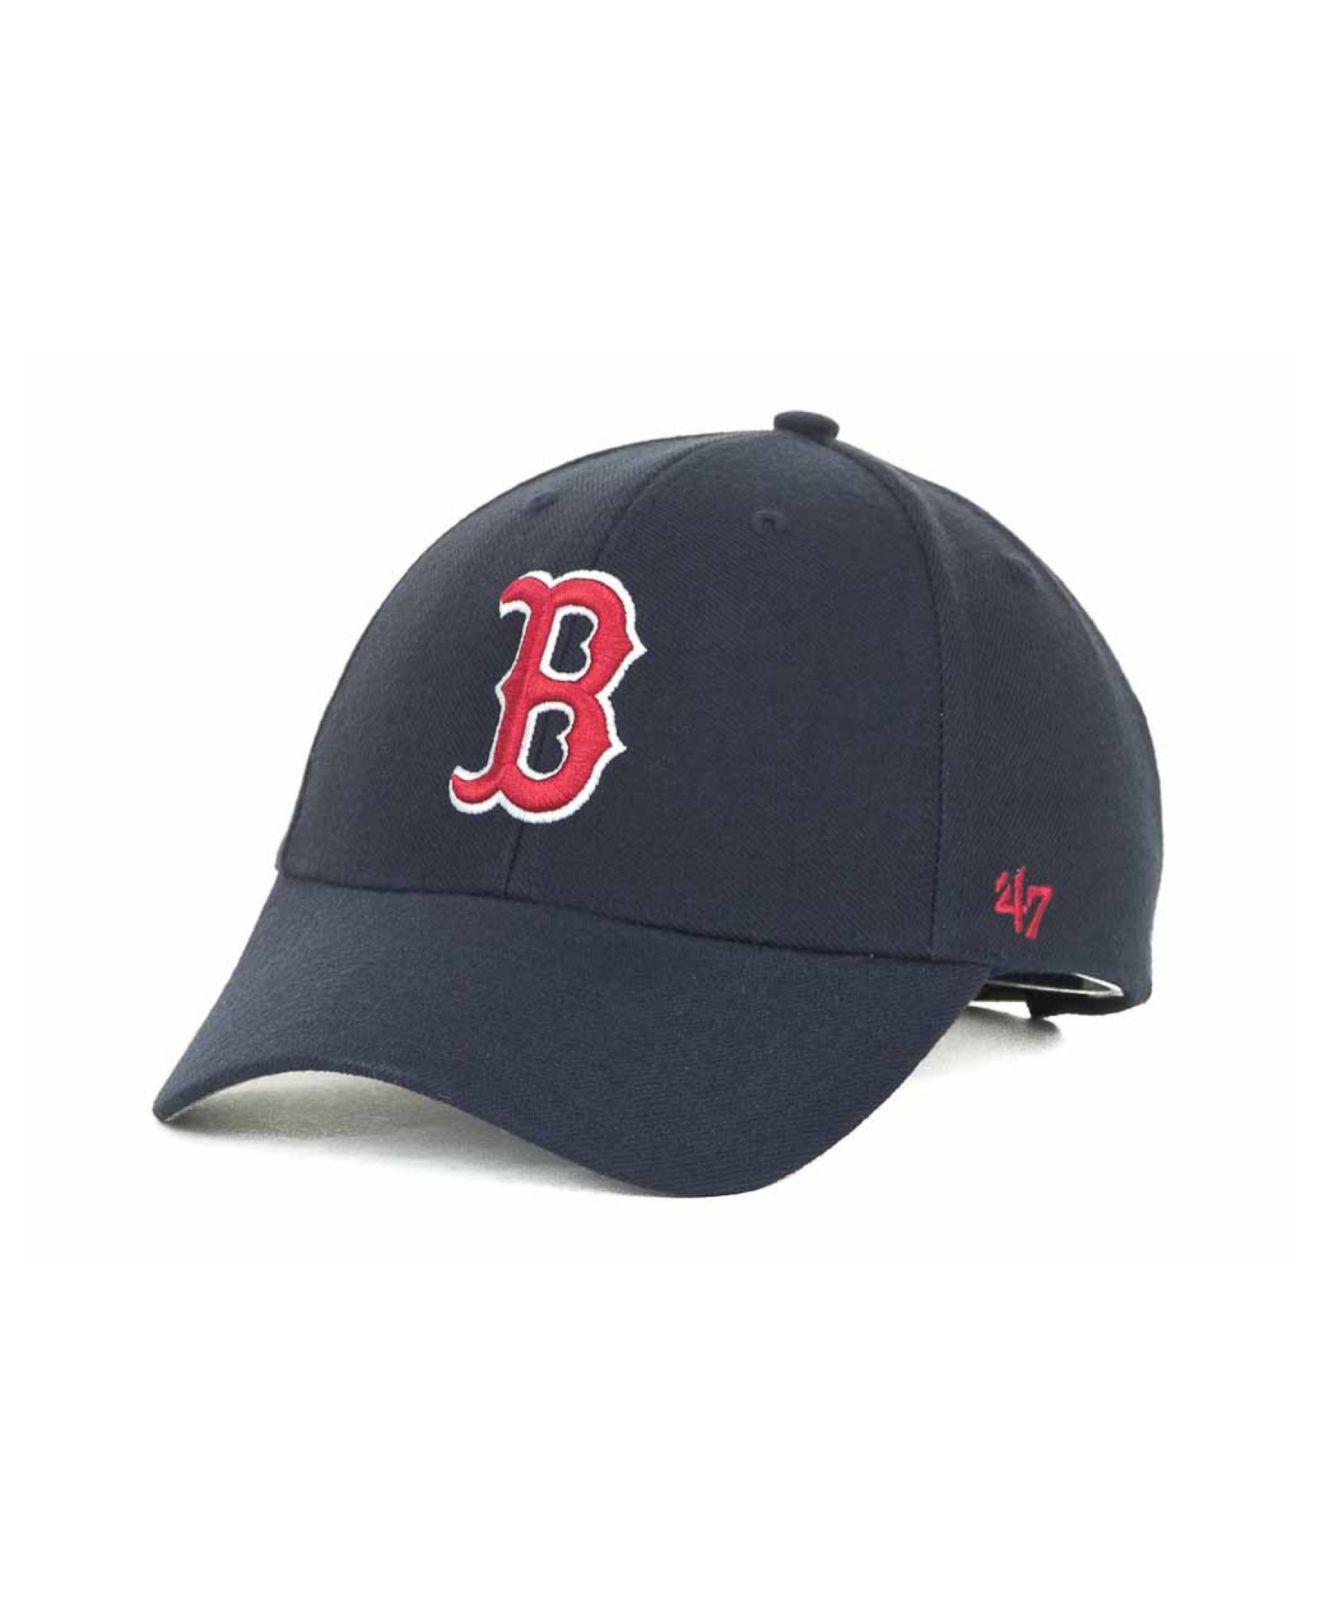 Lyst - 47 Brand Boston Red Sox Mlb On Field Replica Mvp Cap in Blue for Men